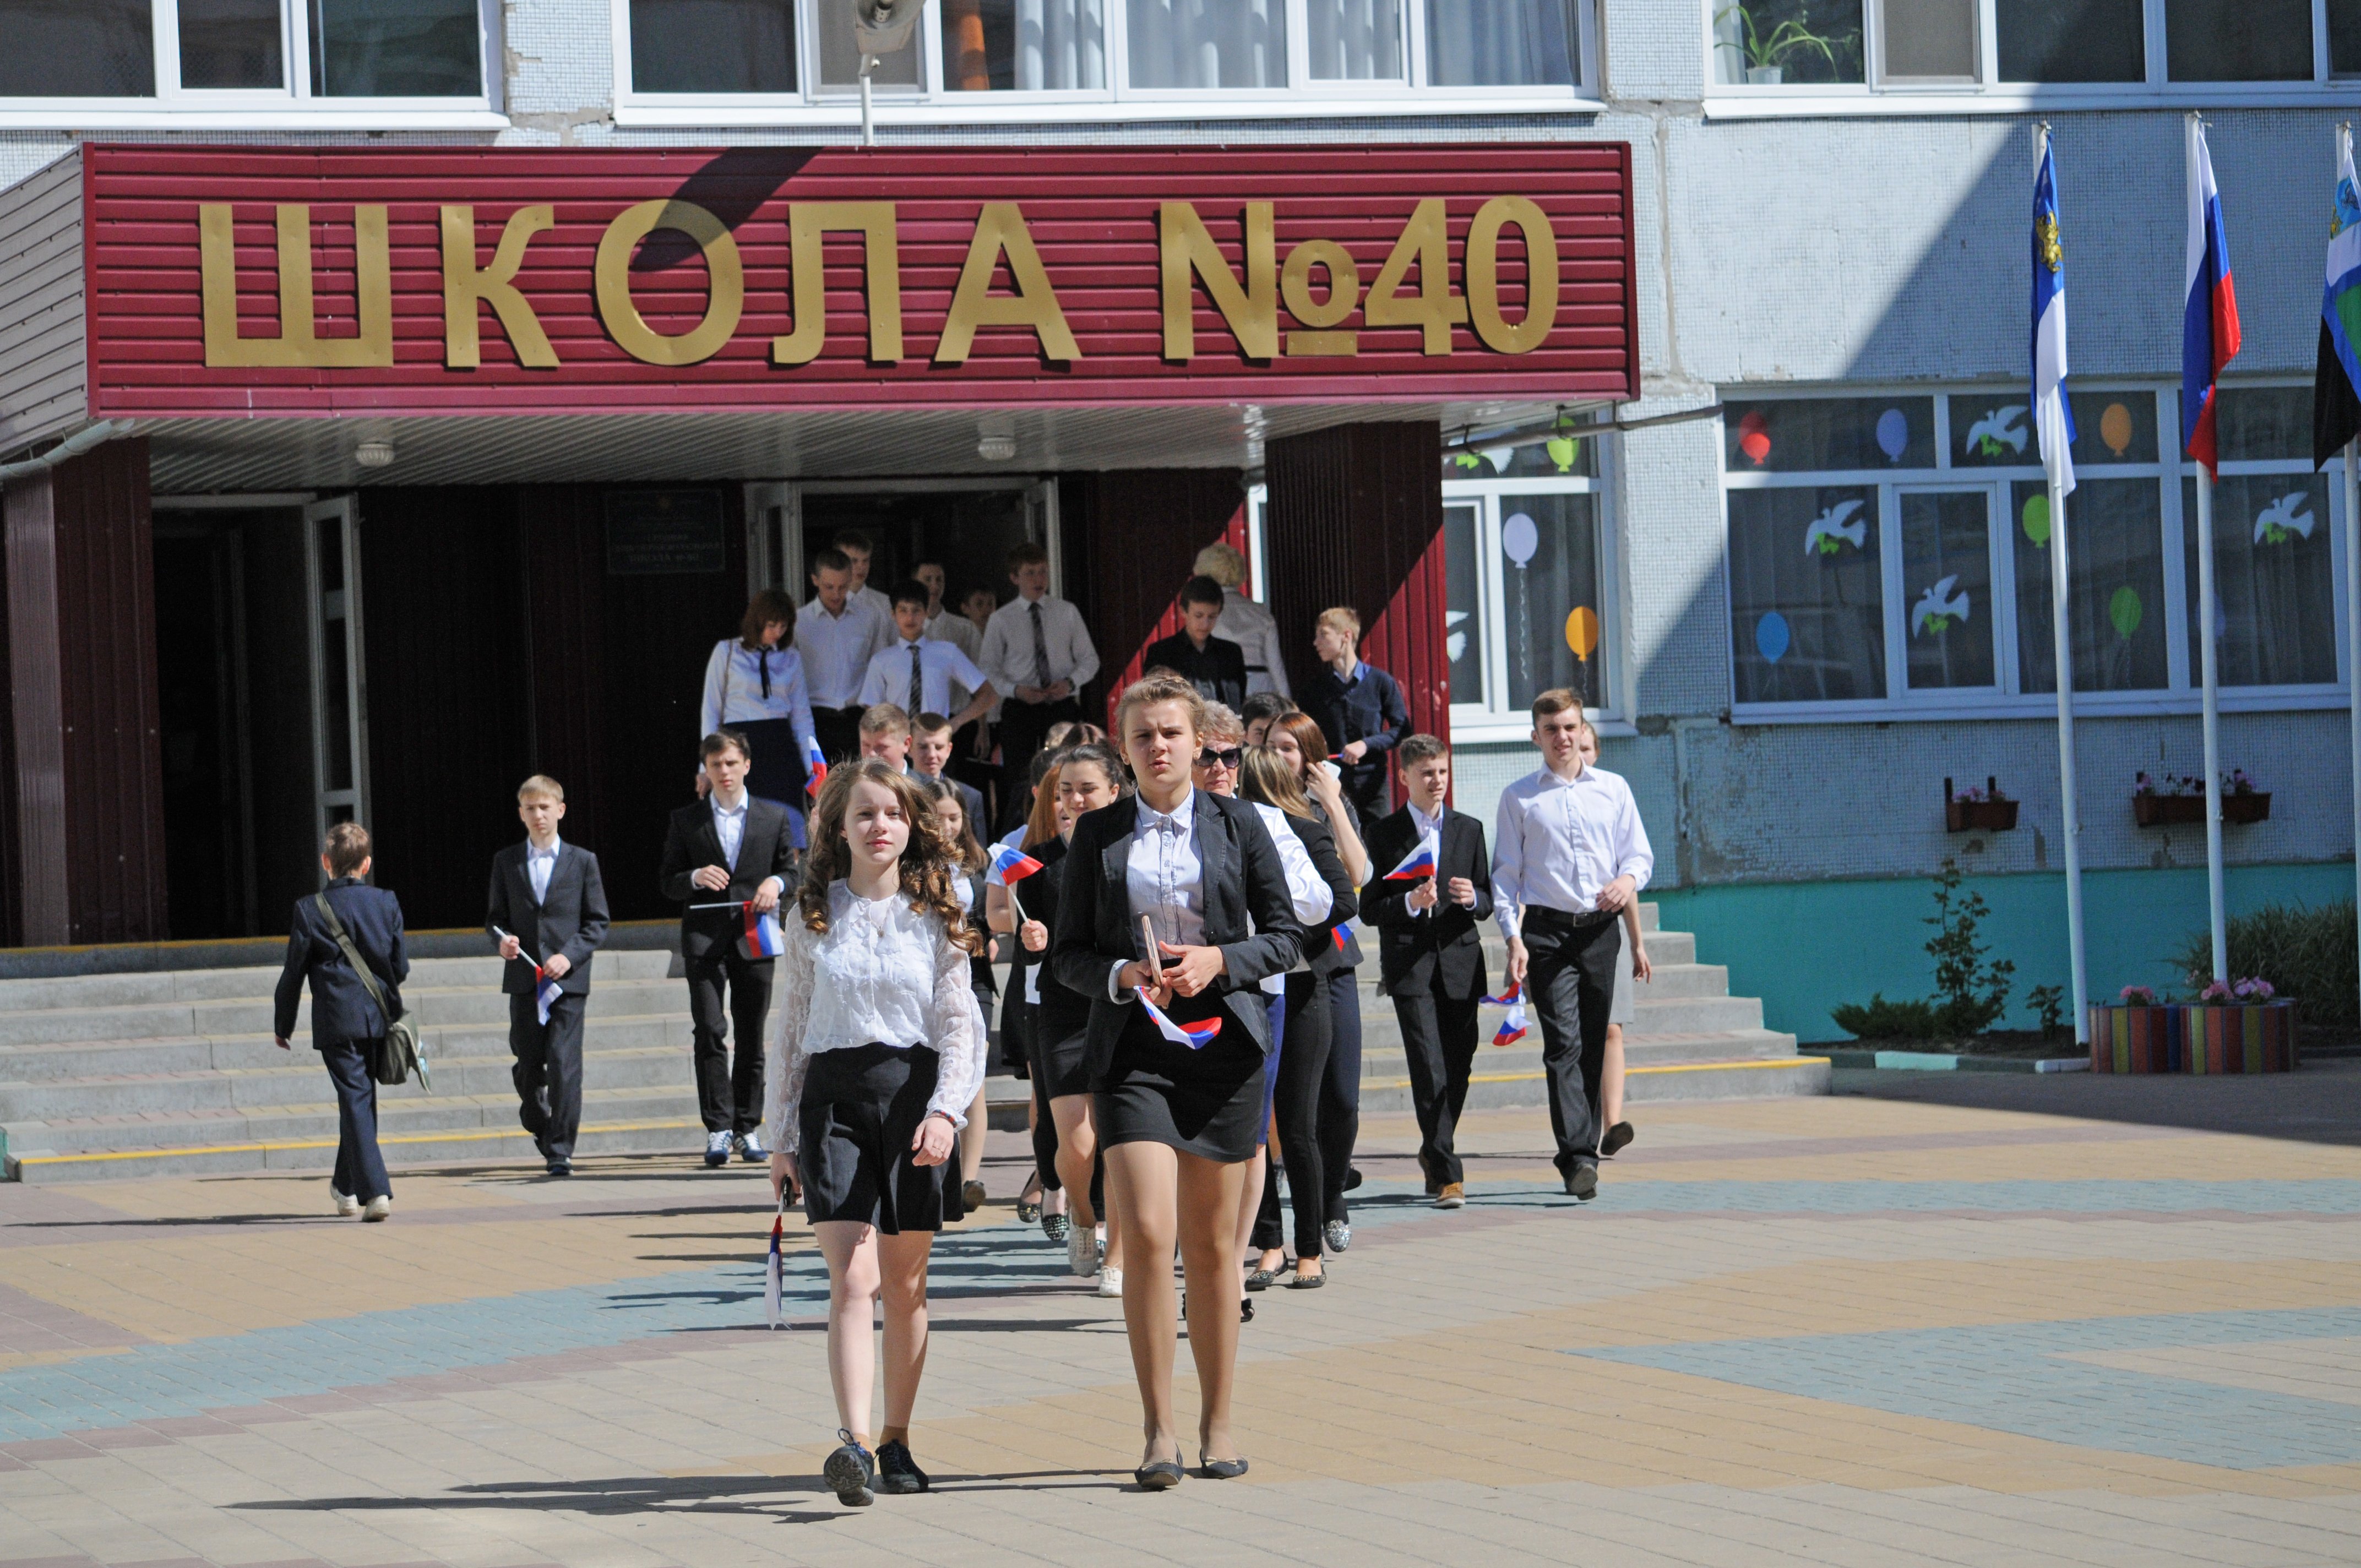 фото школы белгород